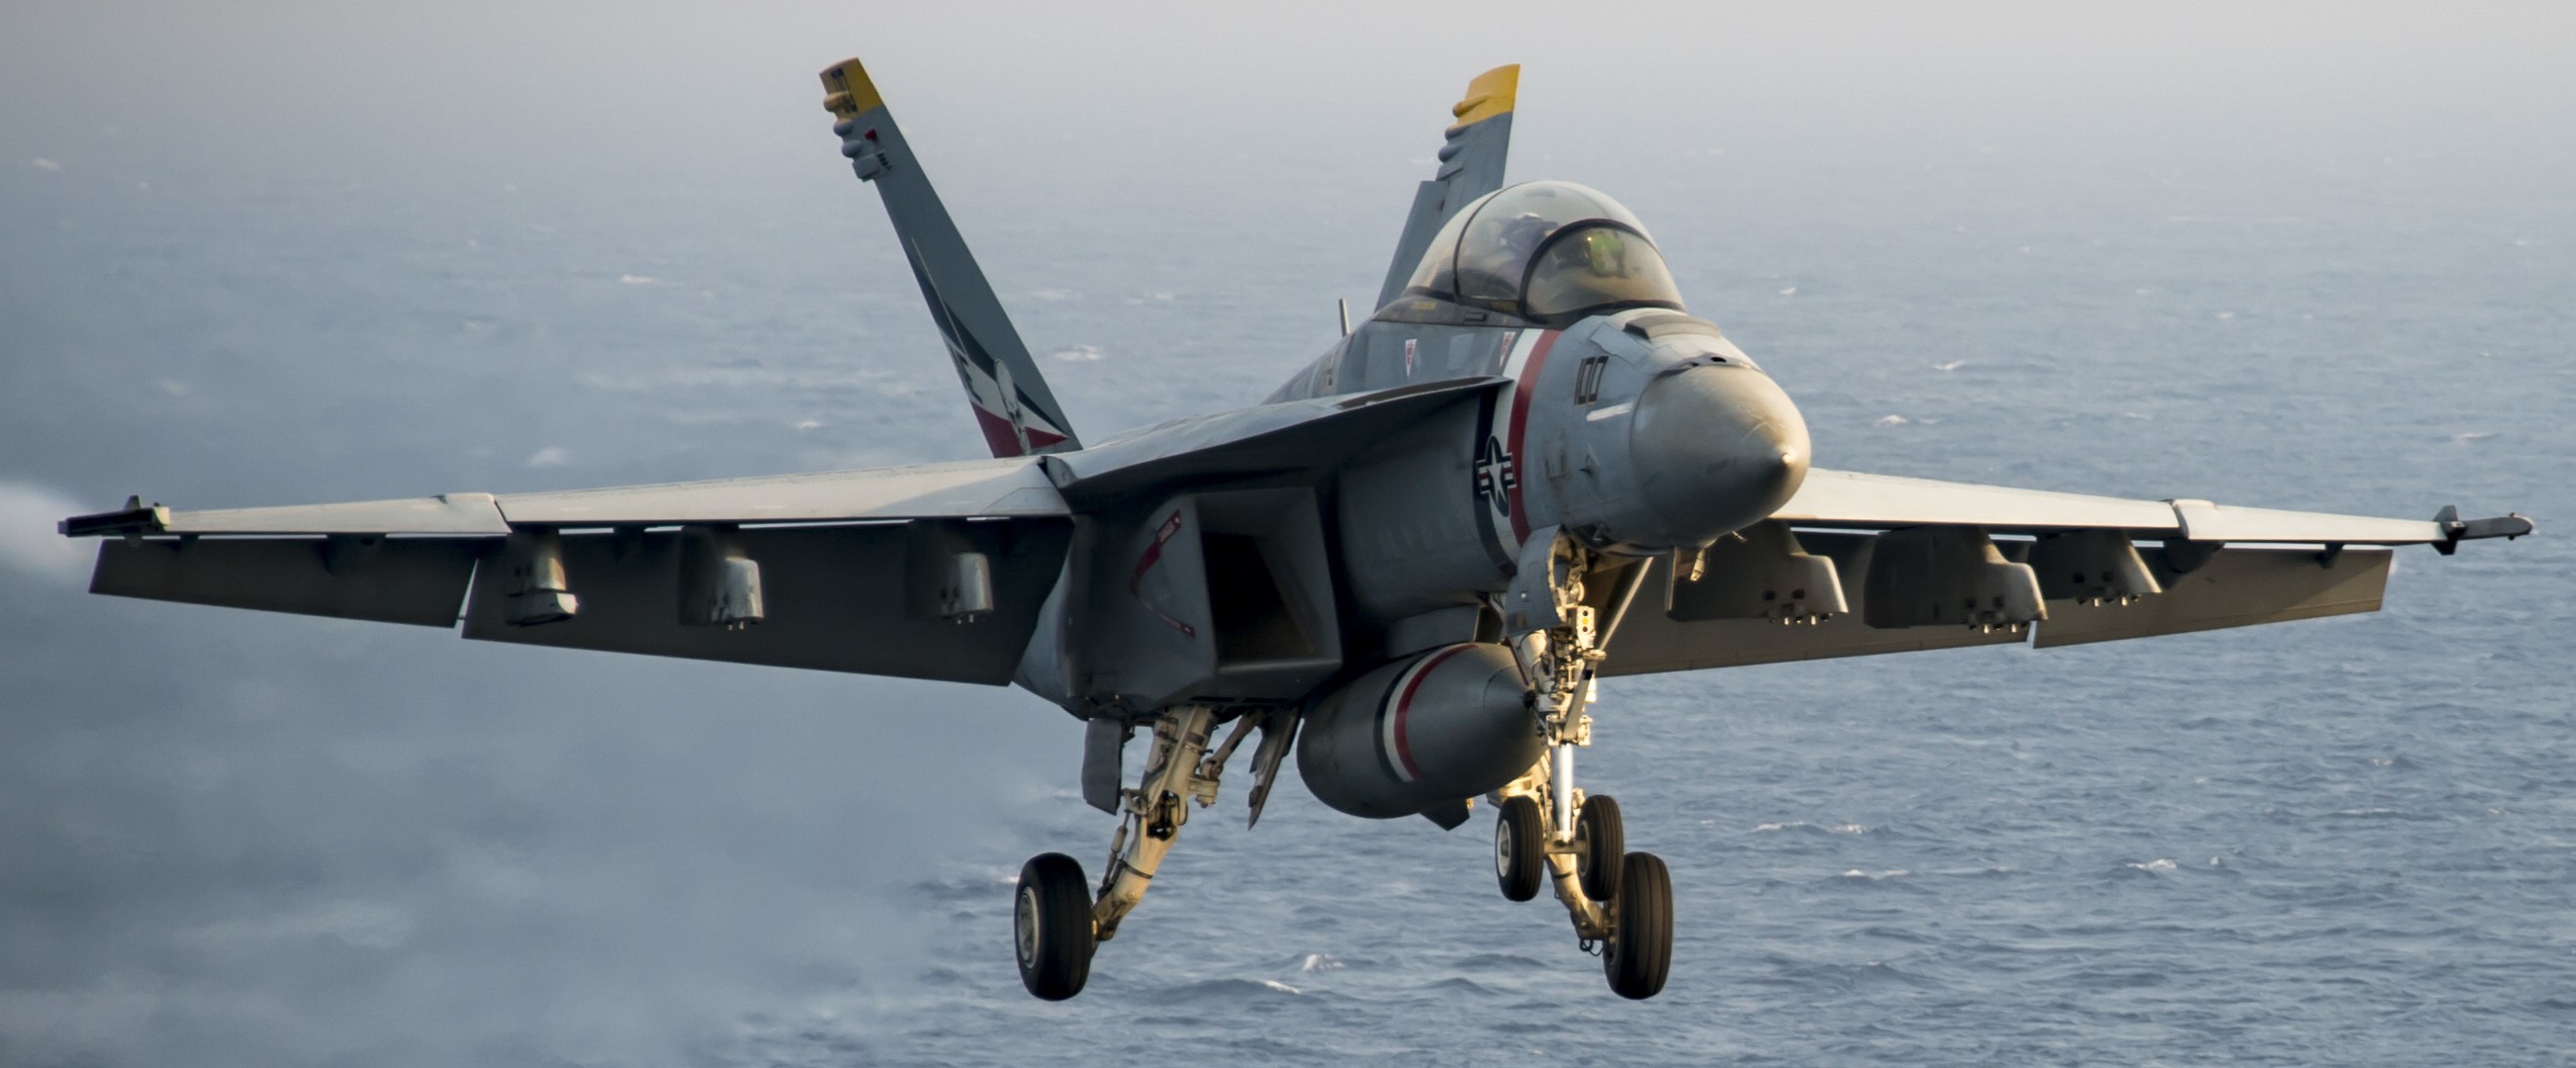 vfa-2 bounty hunters strike fighter squadron us navy f/a-18f super hornet carrier air wing cvw-2 uss carl vinson cvn-70 54